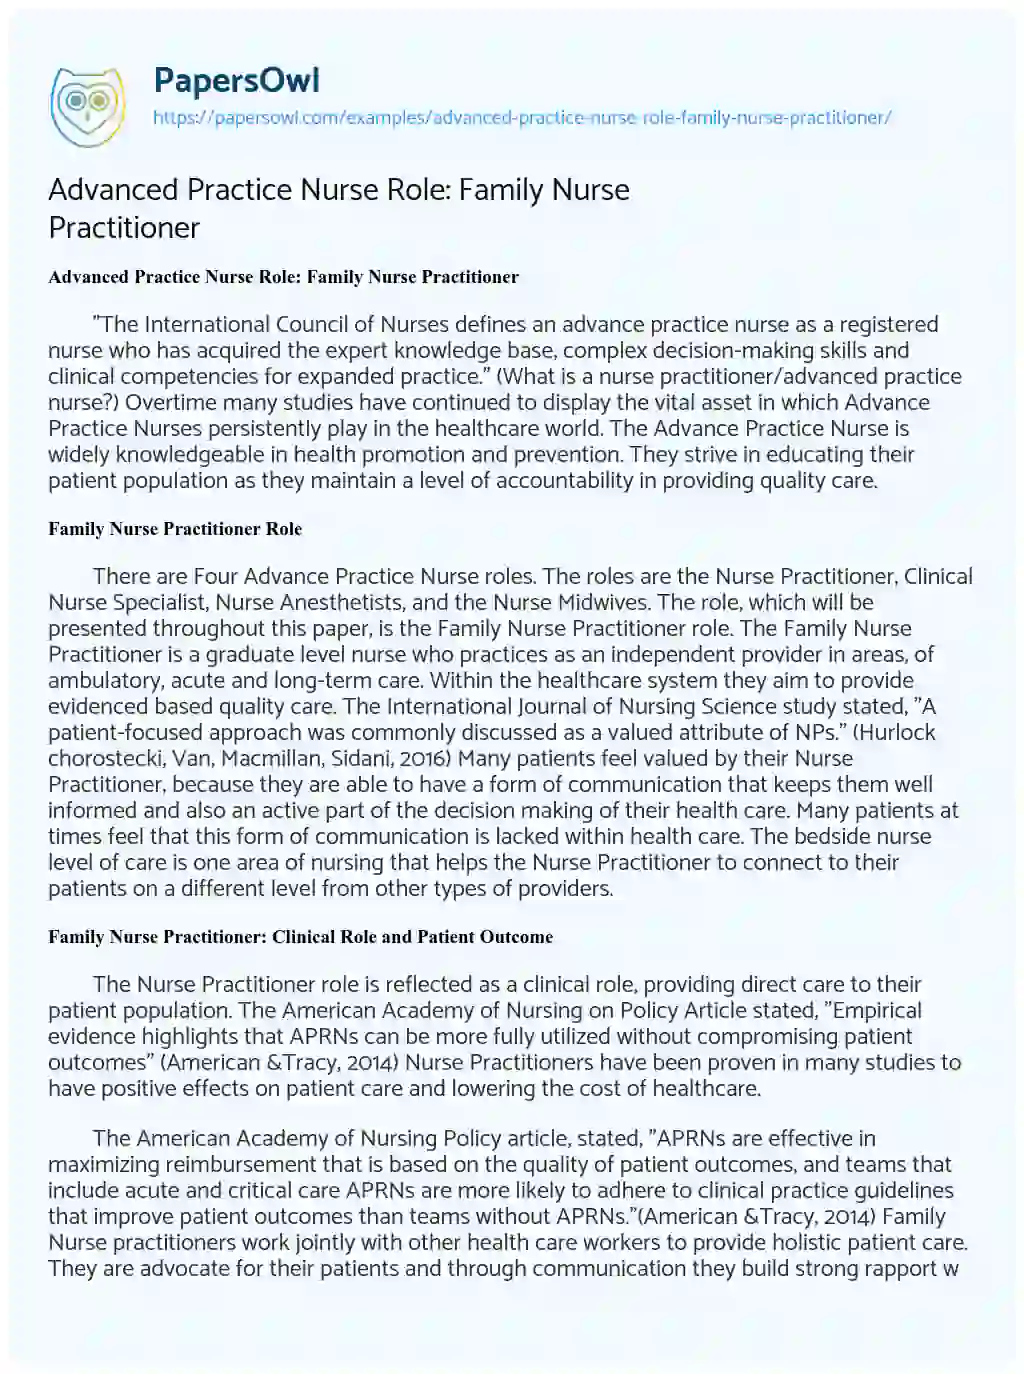 Advanced Practice Nurse Role: Family Nurse Practitioner essay